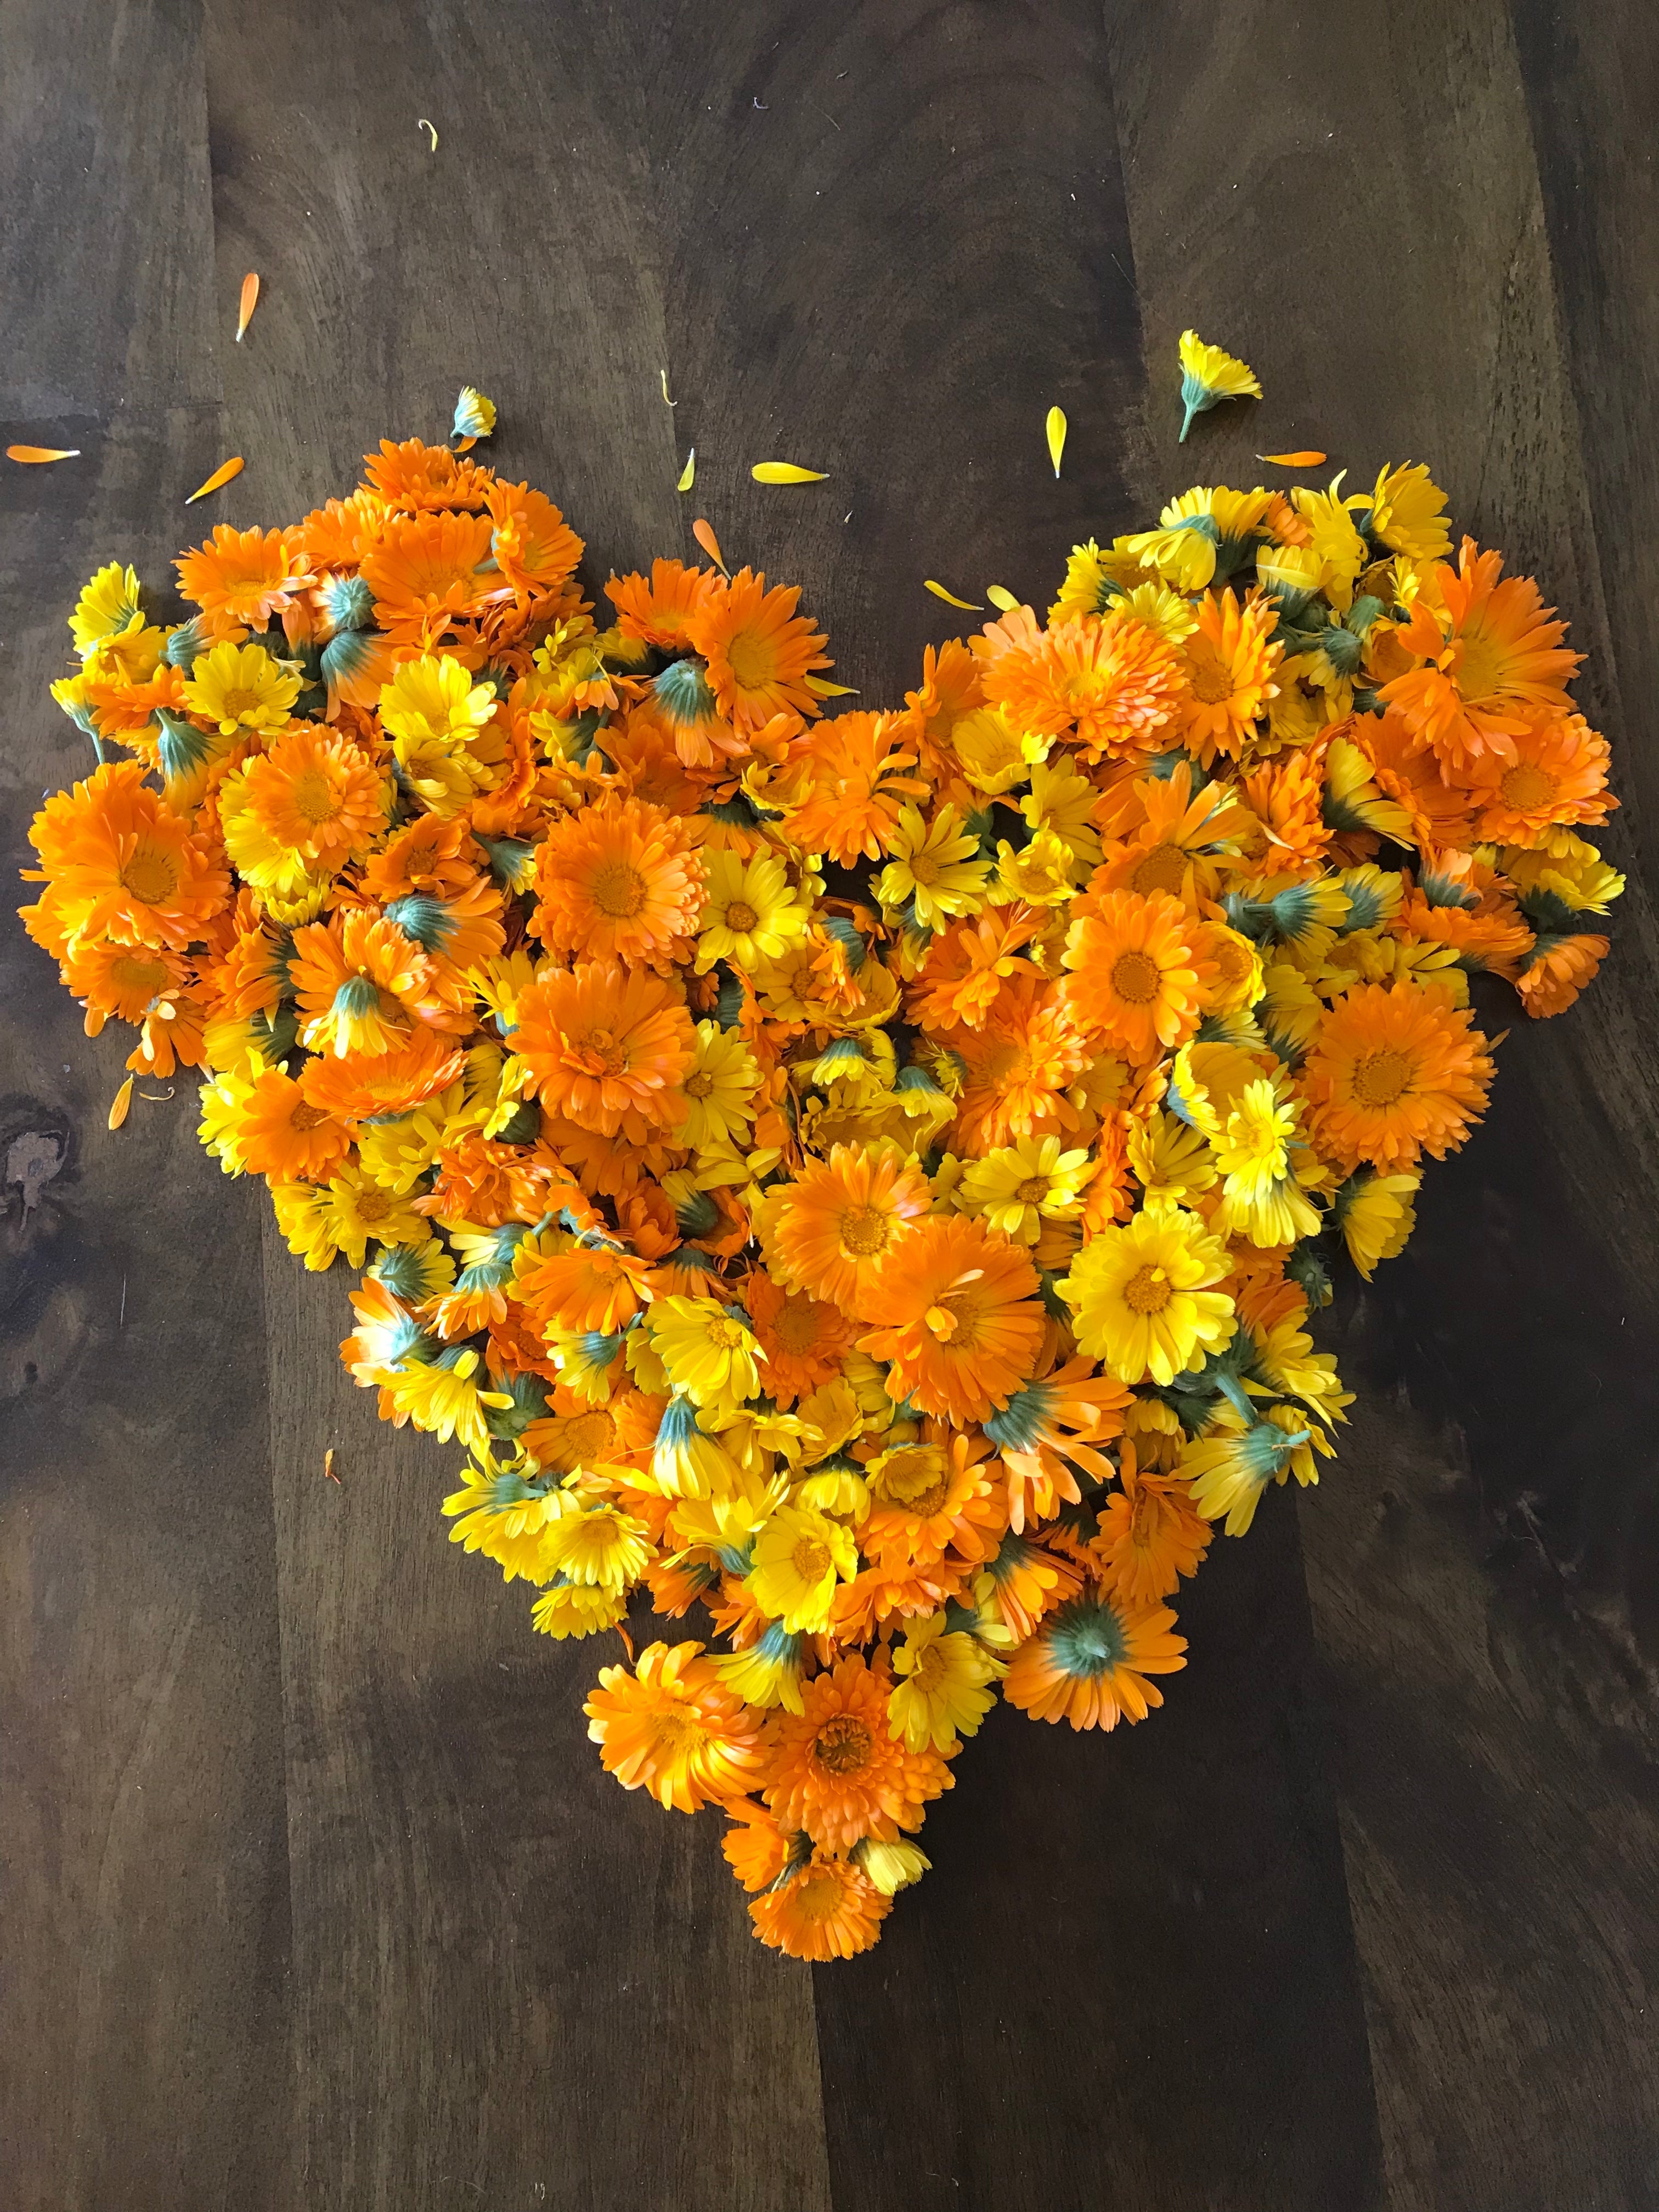 orange and yellow Calendula flowers in shape of a heart